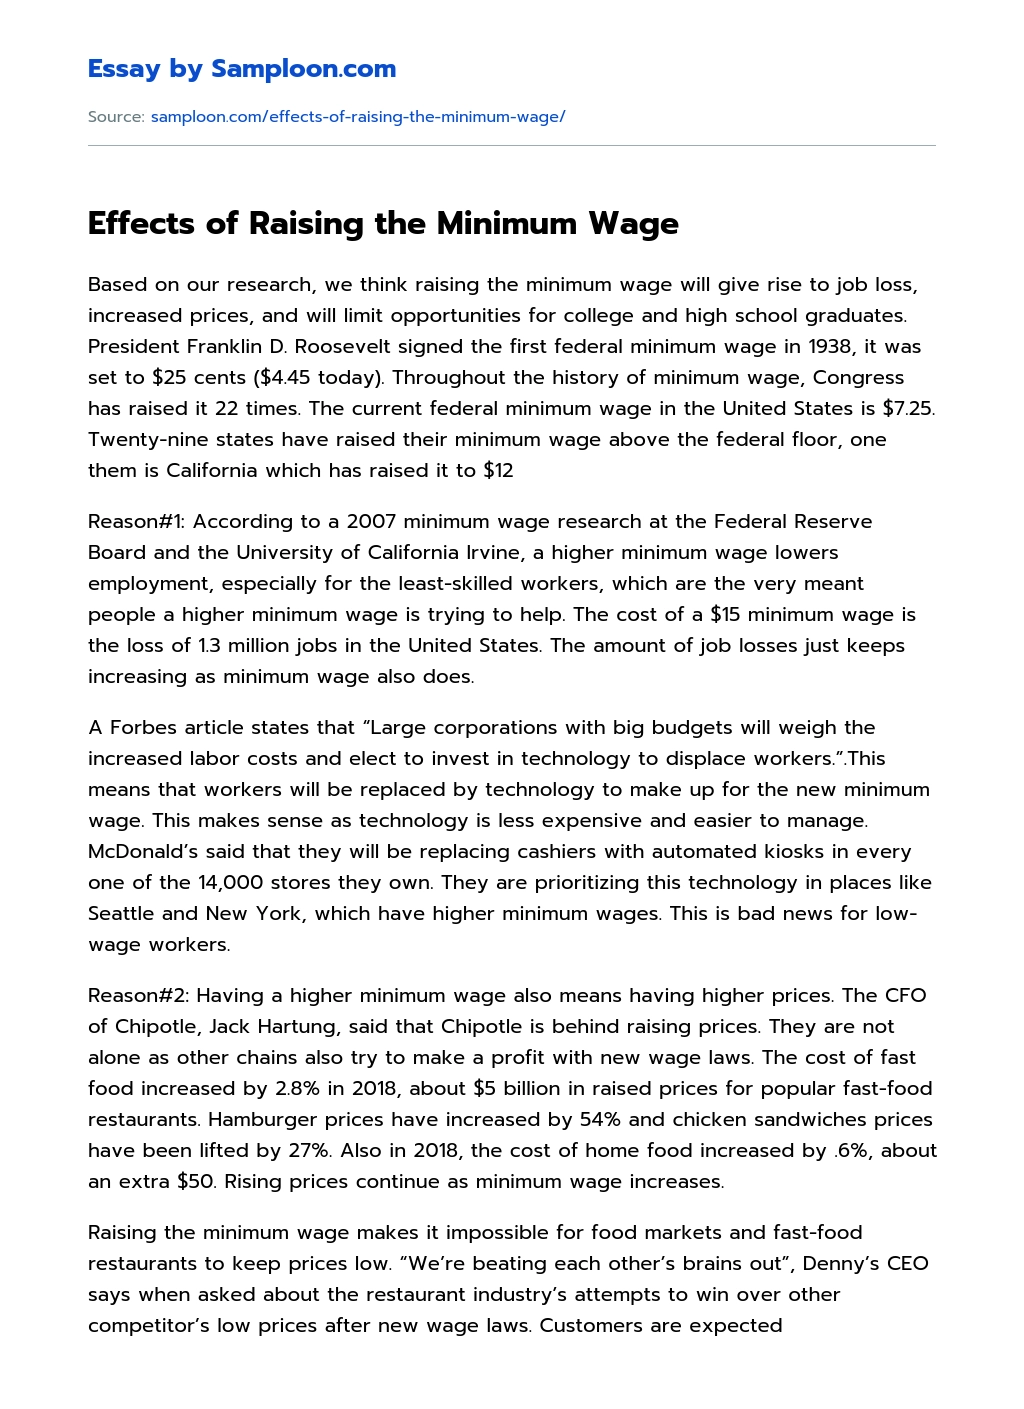 Реферат: Reasons To Raise Minimum Wage Essay Research